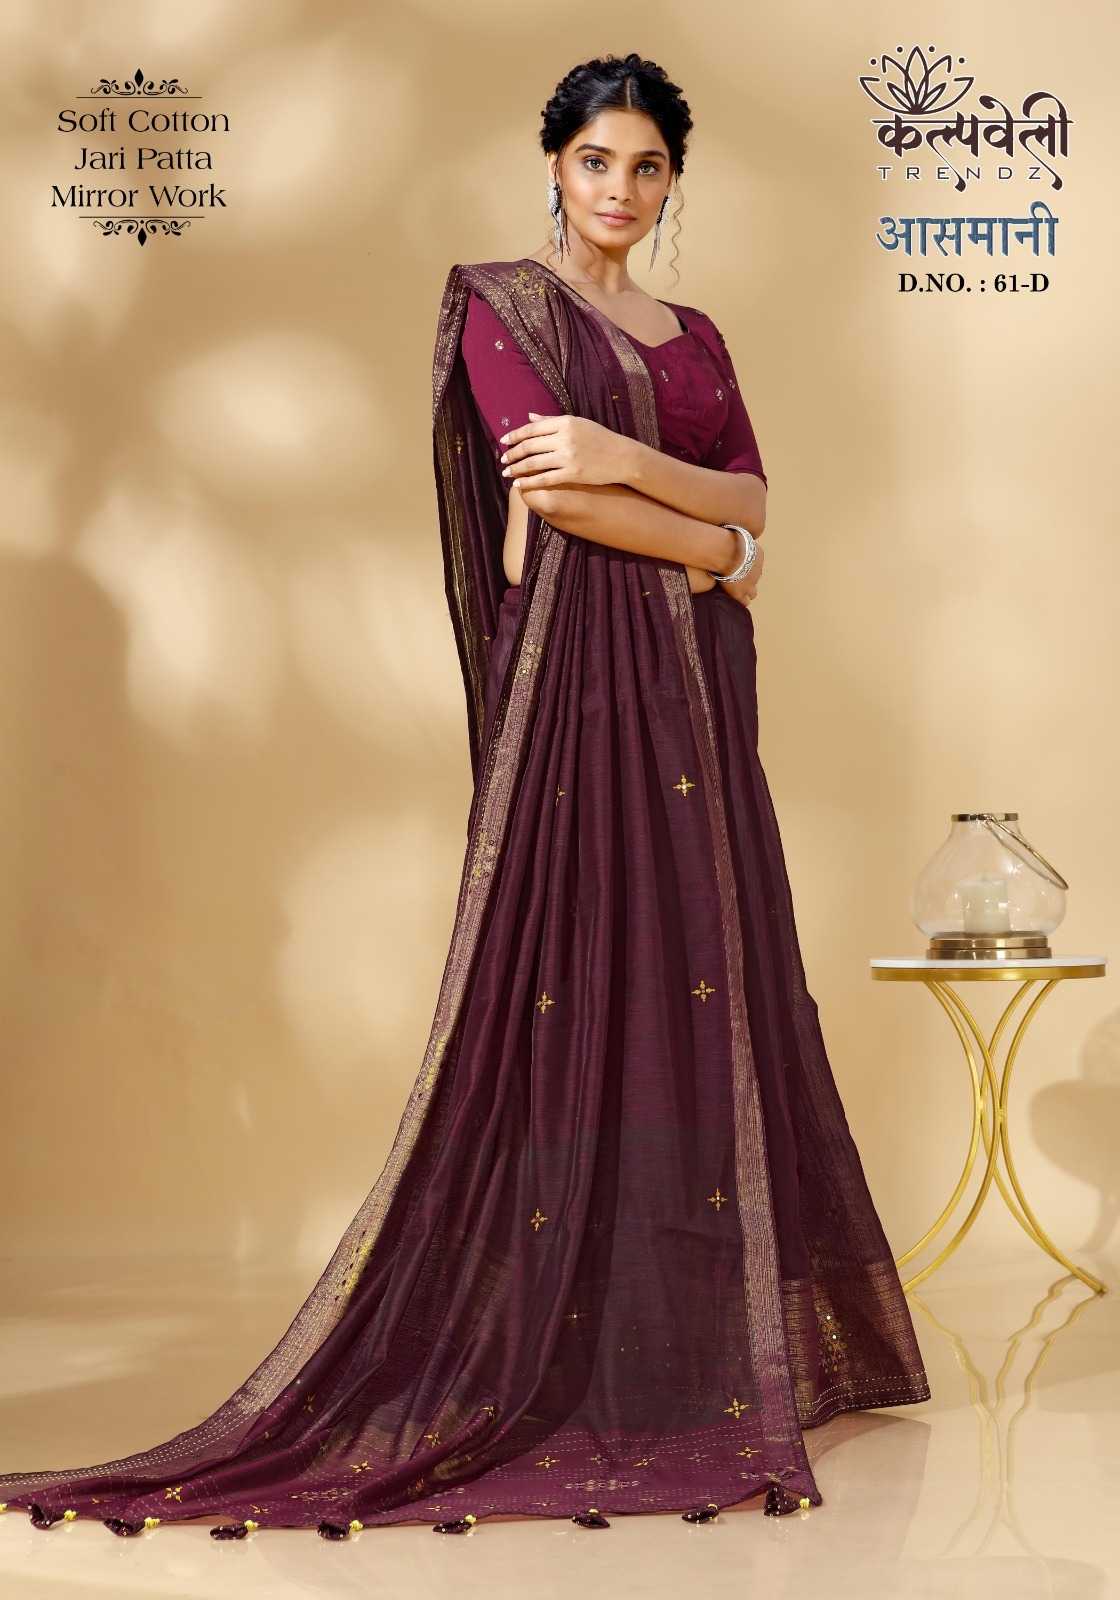 kalpavelly trendz ashmani 61 cotton party wear saree supplier